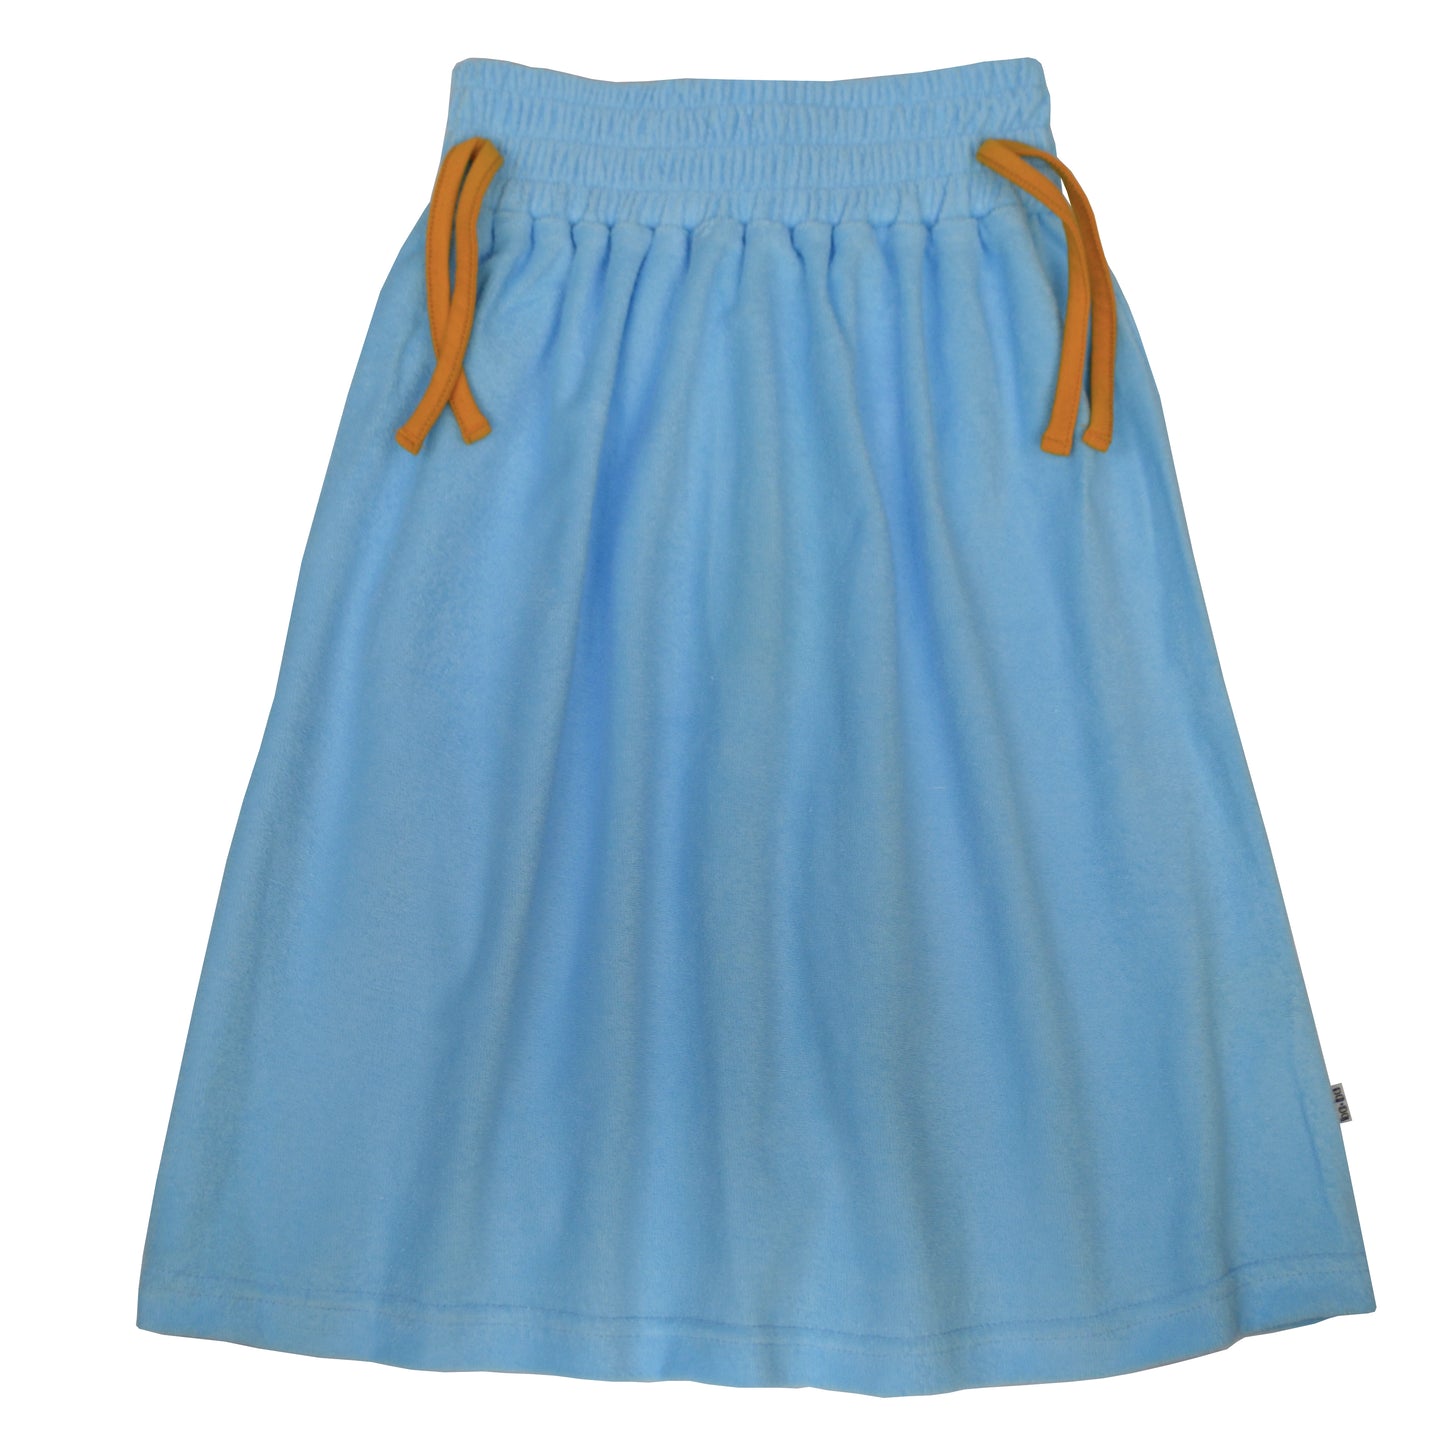 Chaga Skirt - Alaskan Blue